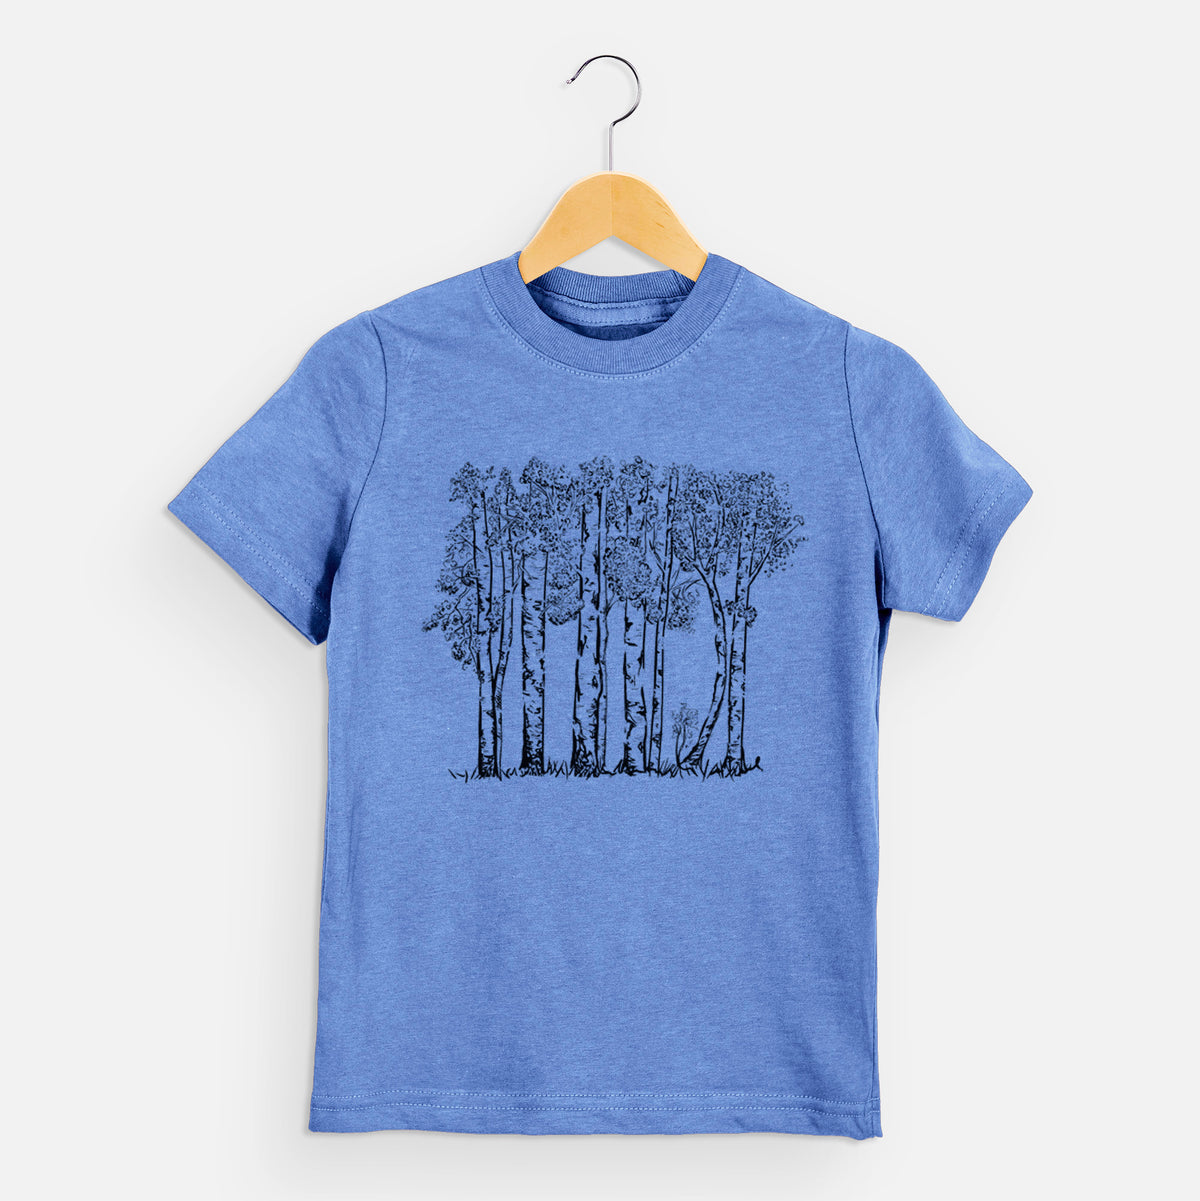 Quaking Aspens - Populus tremuloides - Kids Shirt